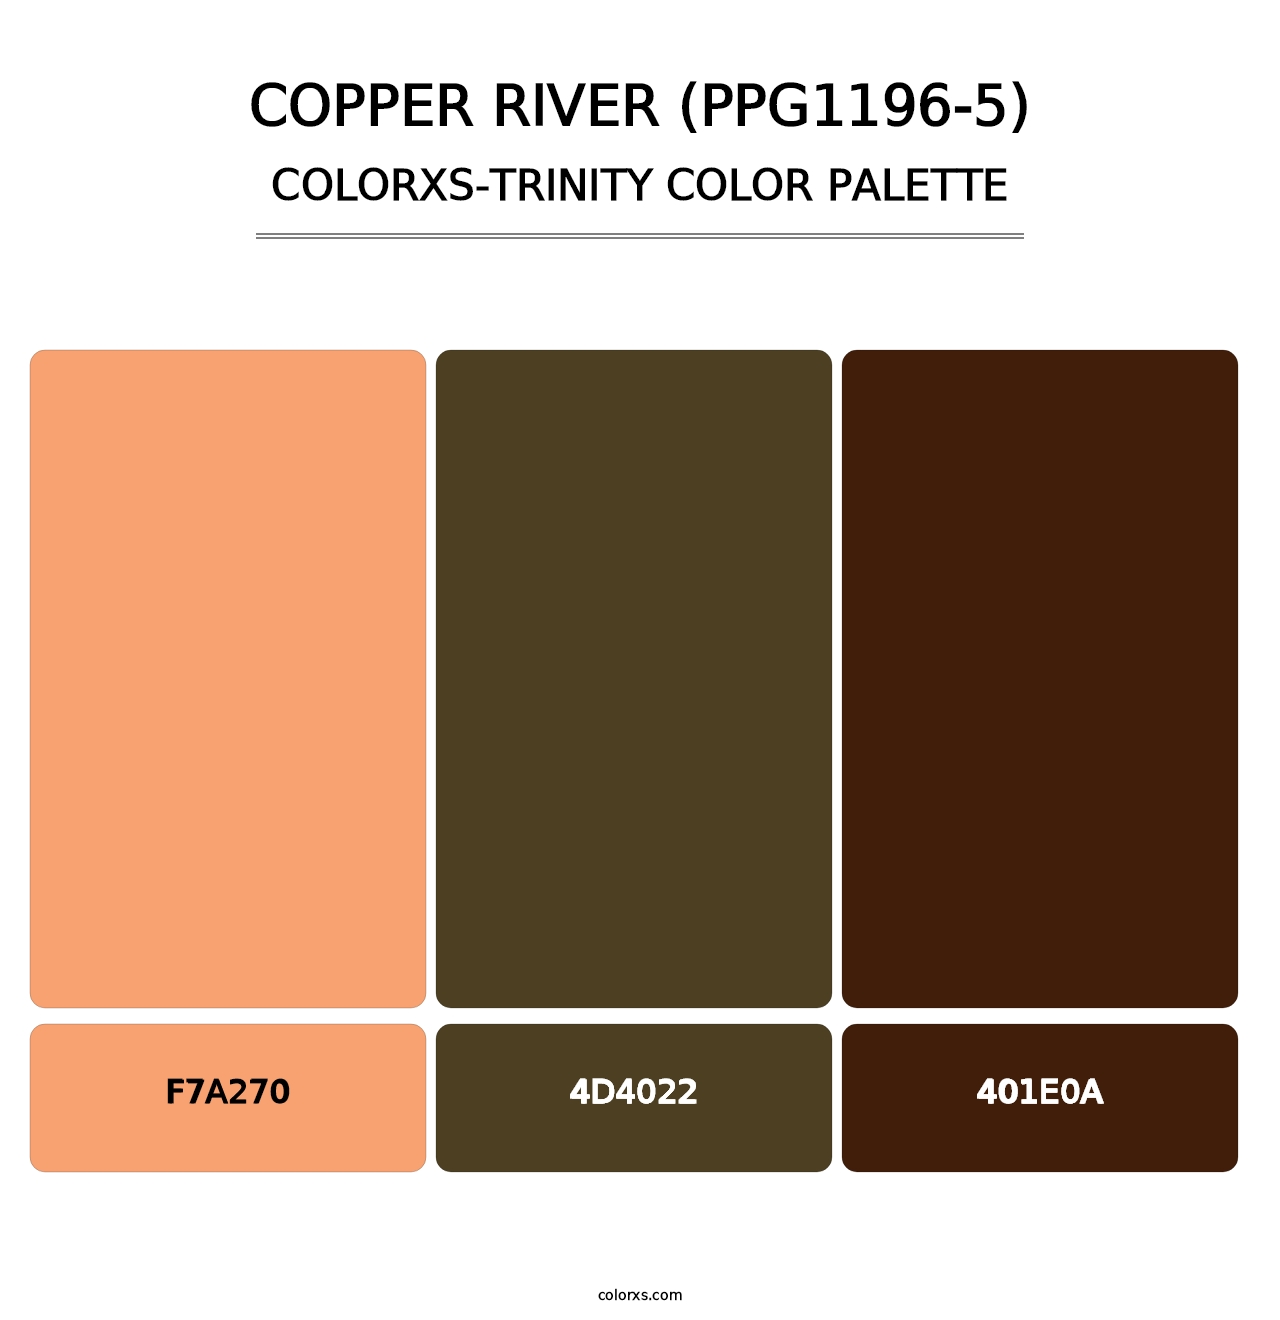 Copper River (PPG1196-5) - Colorxs Trinity Palette